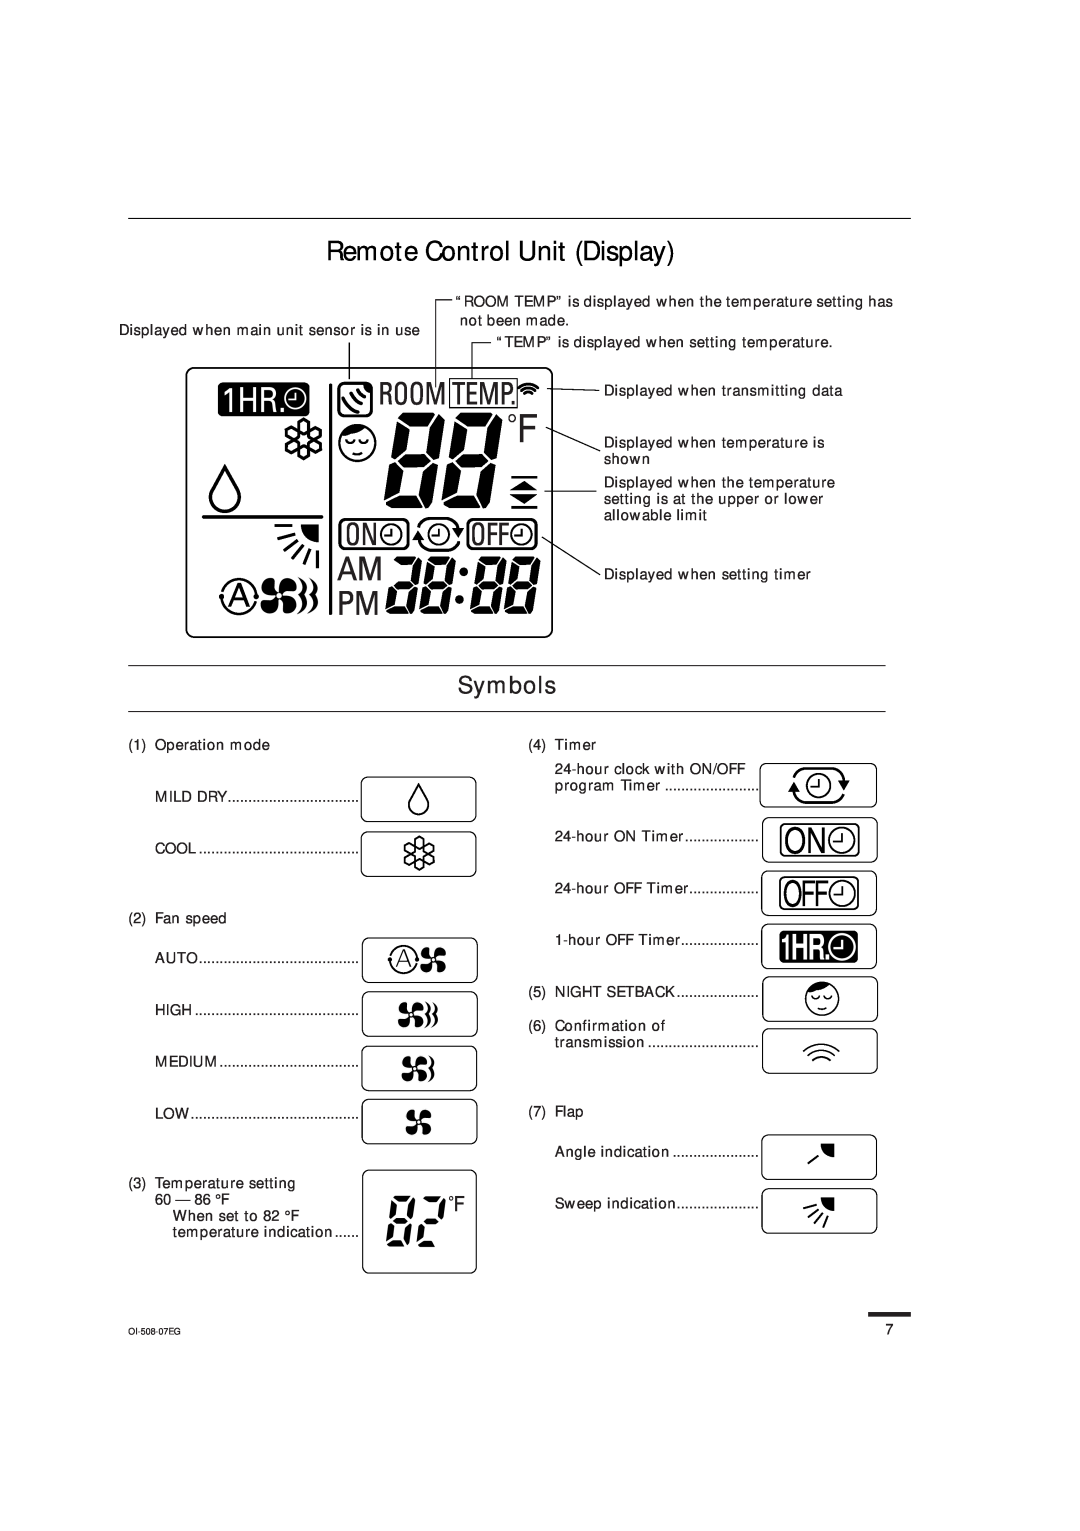 Sanyo KS2462R instruction manual Remote Control Unit Display, Symbols, On Off 